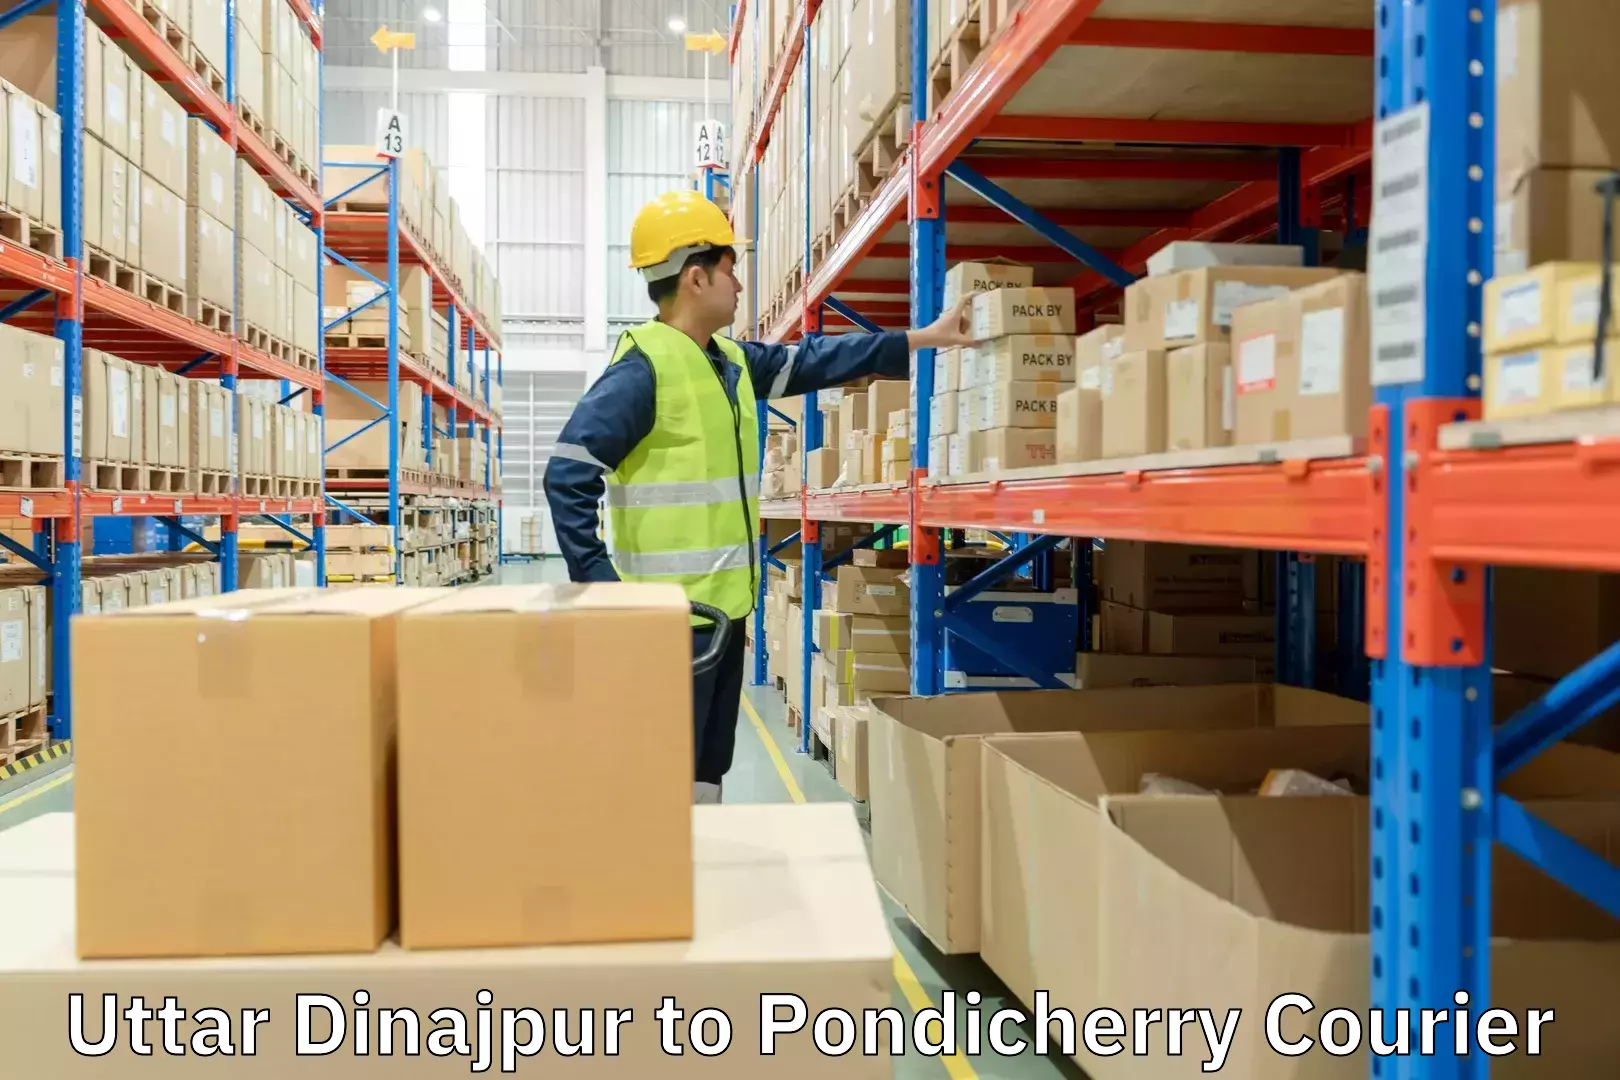 Nationwide shipping coverage Uttar Dinajpur to Pondicherry